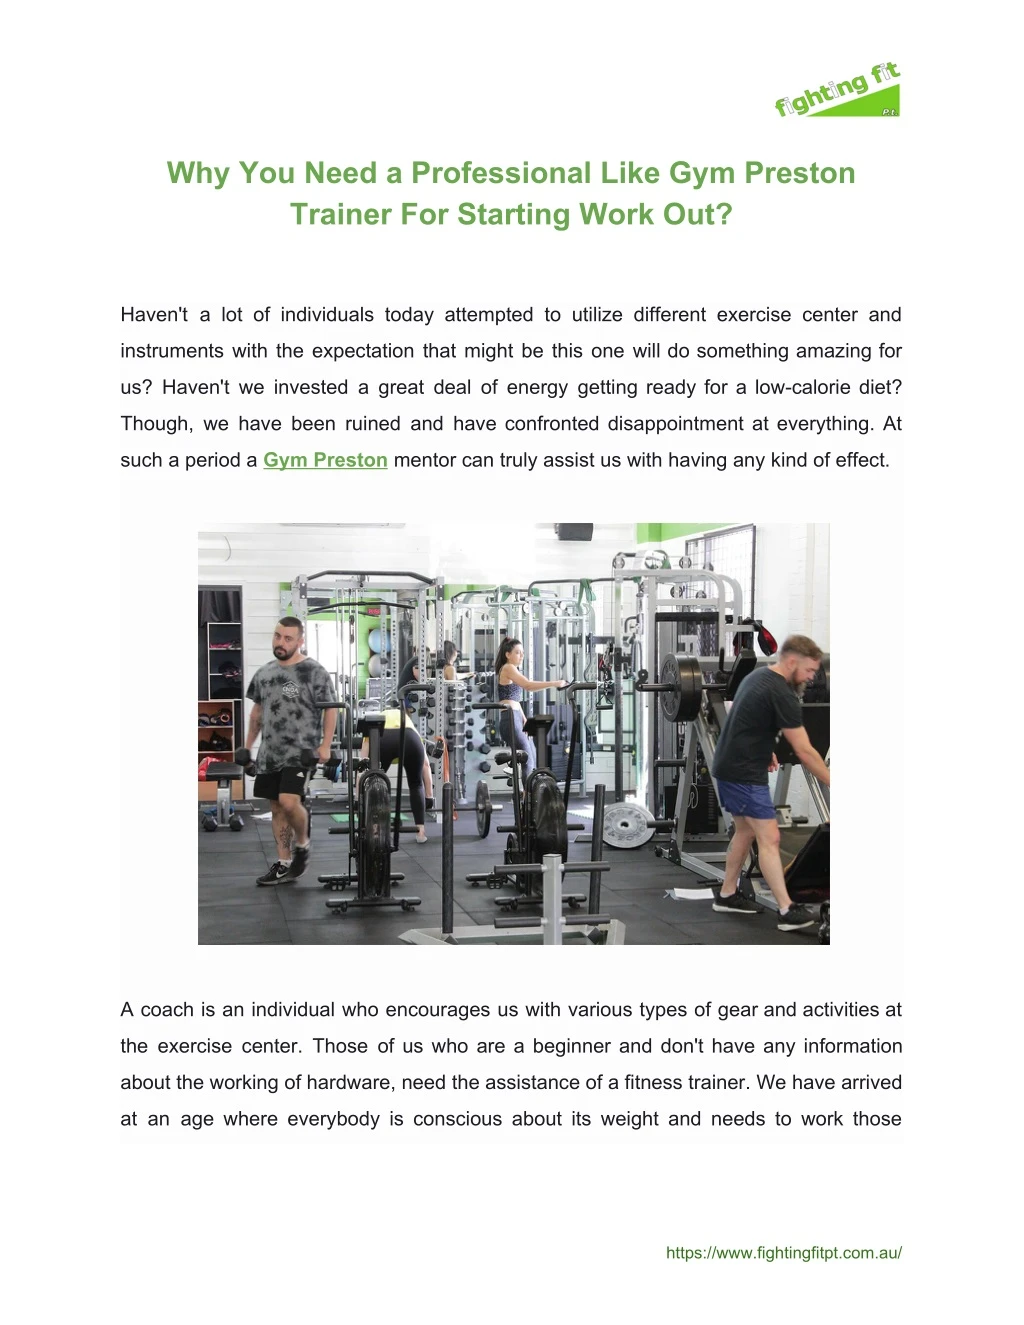 why you need a professional like gym preston